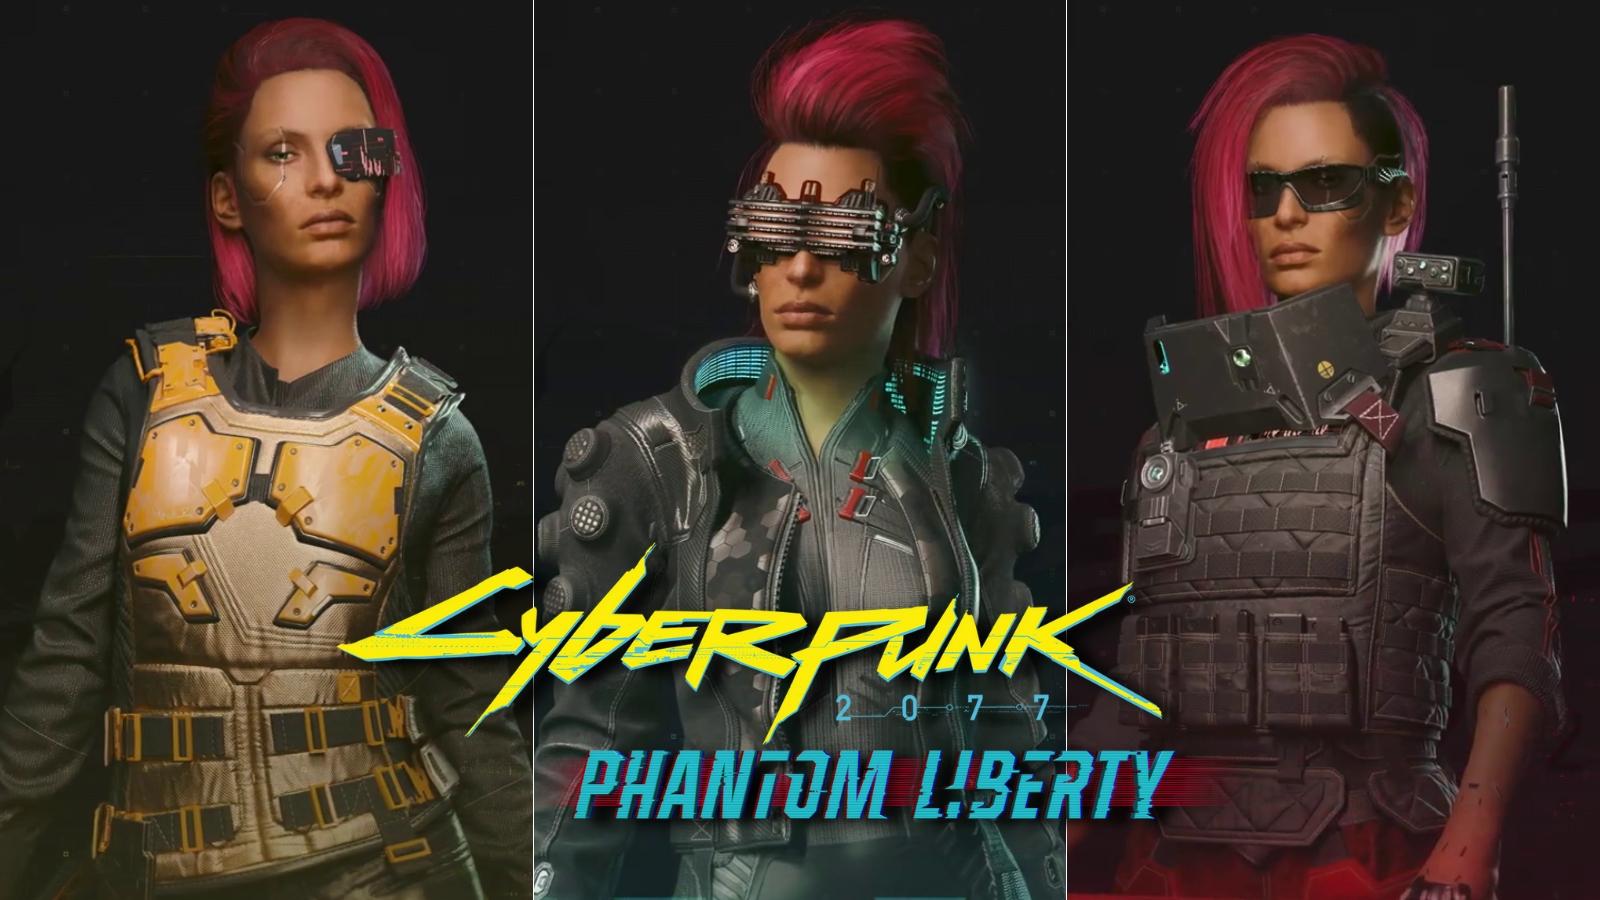 Cyberpunk 2077 Phantom Liberty builds